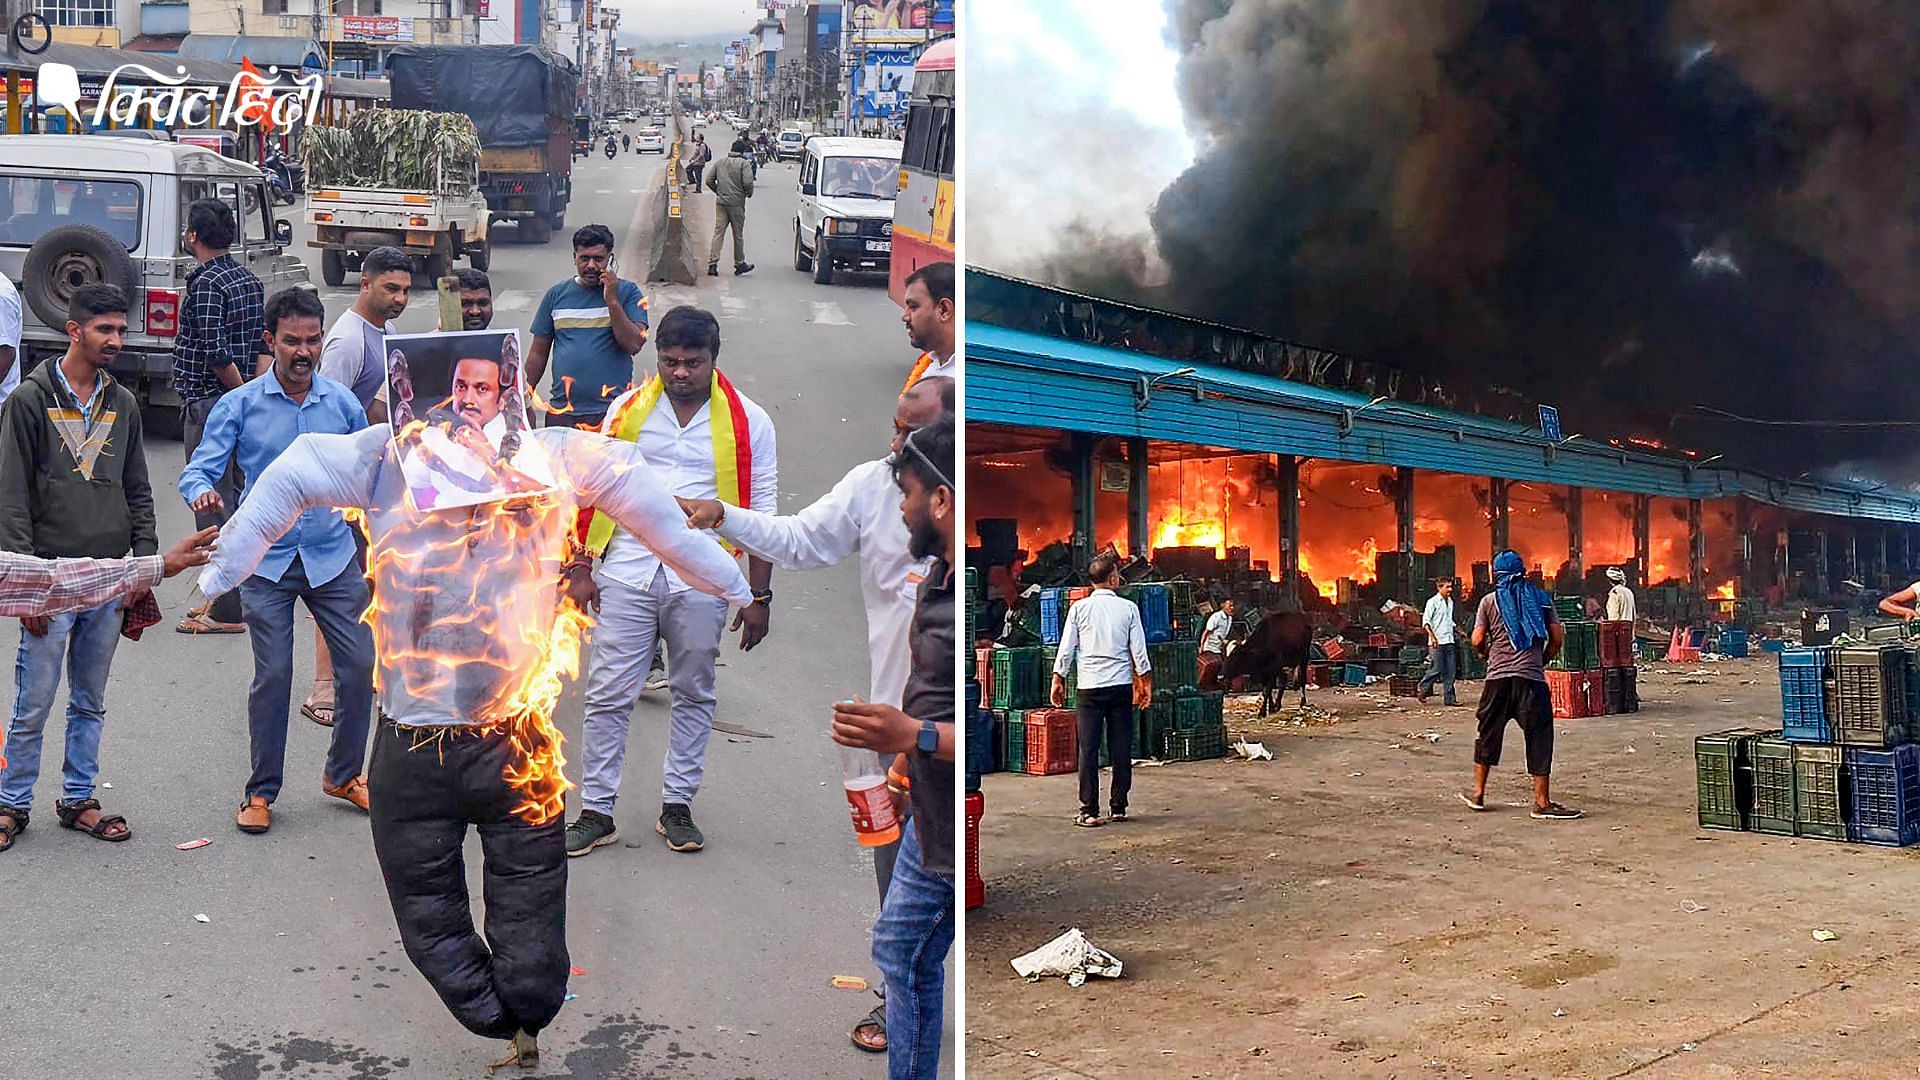 <div class="paragraphs"><p>Top 10 Photos: कर्नाटक बंद का दिखा असर, आजादपुर मंडी में लगी भीषण आग</p></div>